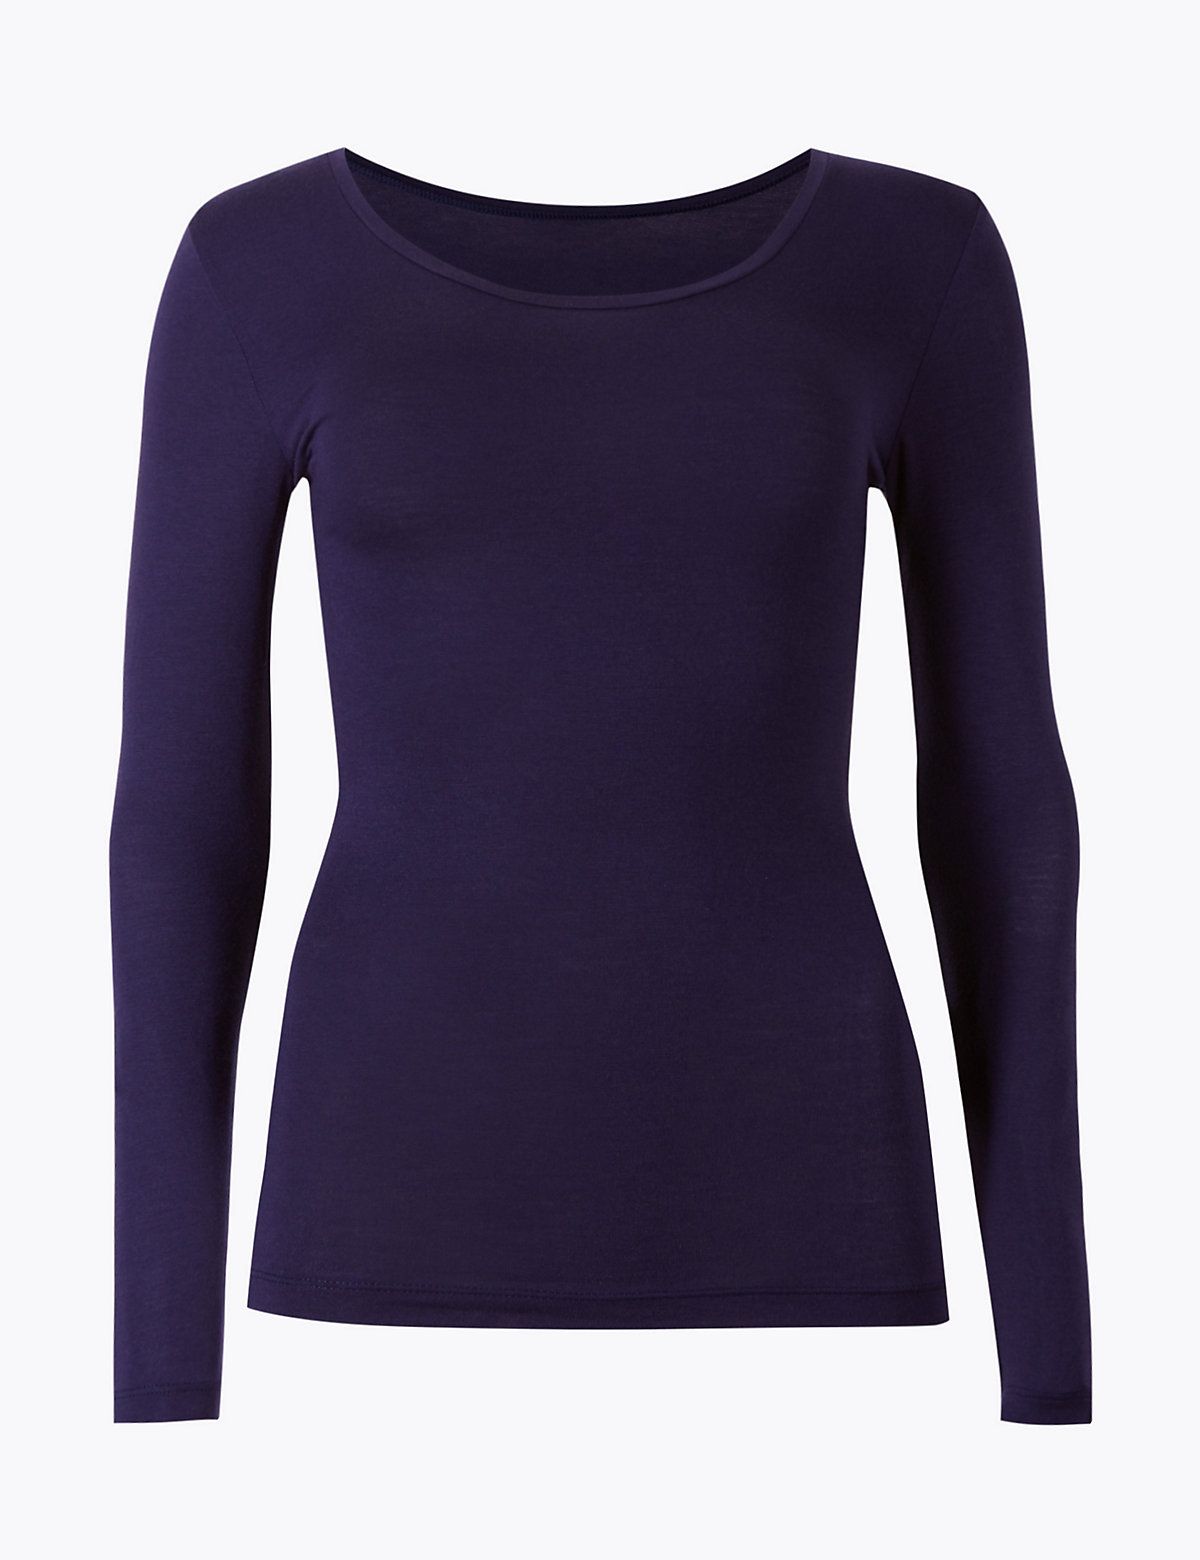 M&S Ladies Heatgen Thermal Long Sleeve Round Neck T-Shirt Top Soft Warm Layering 